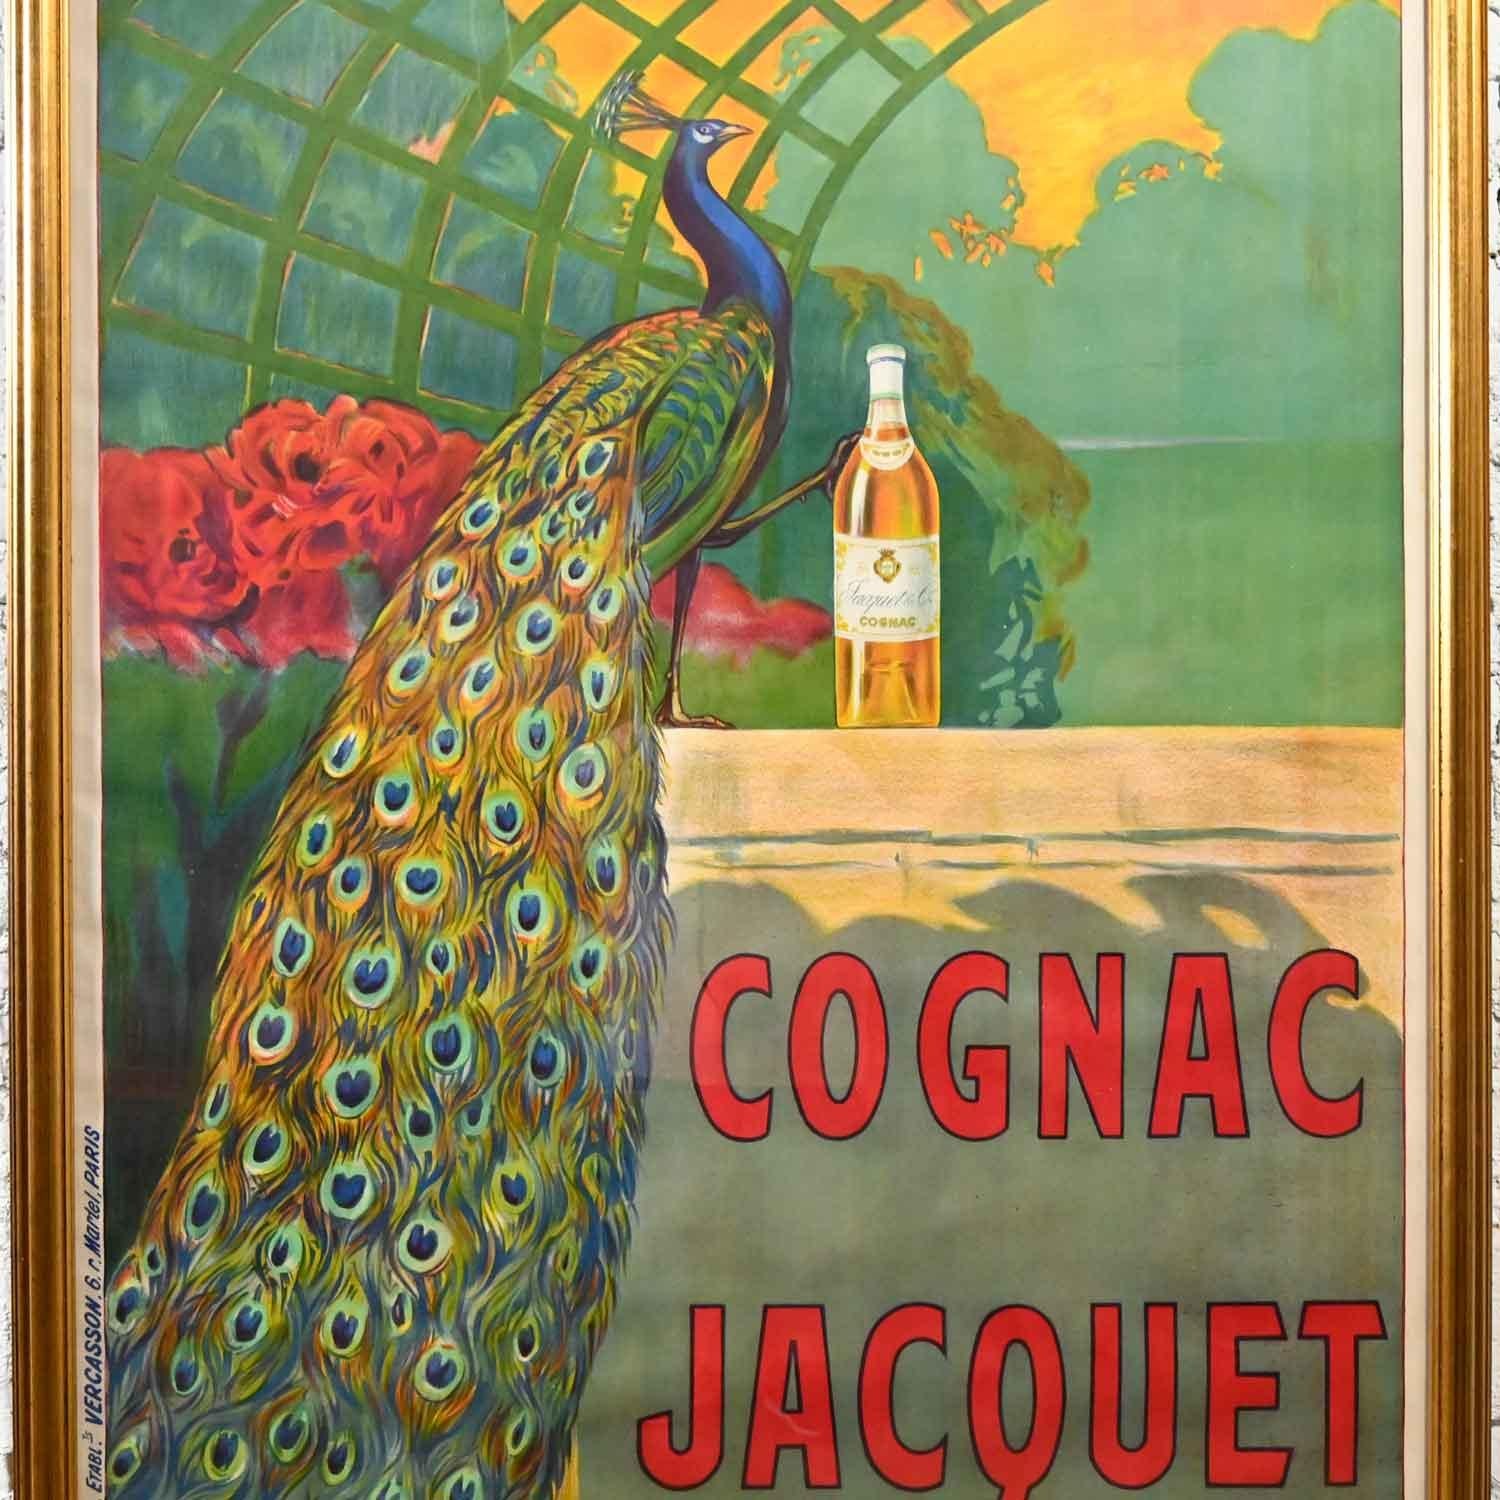 Bouchet Antique Art Deco Art Nuovo Cognac Jacquet Advertising Peacock Poster 1